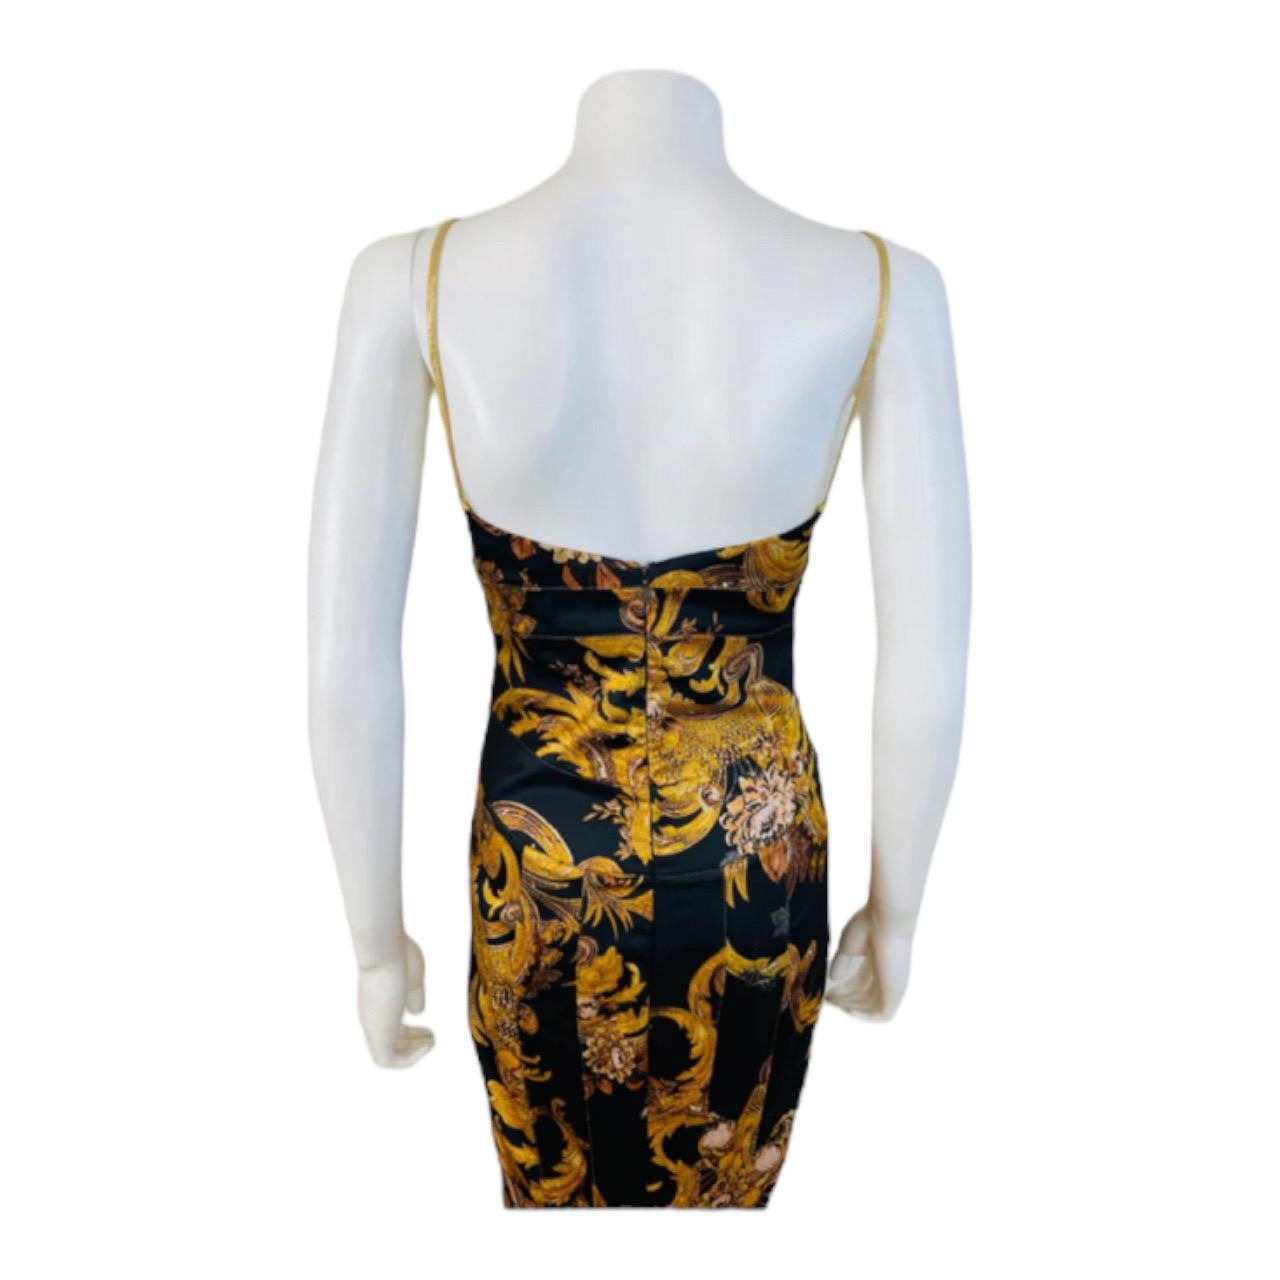 Vintage 2000s Y2K Just Cavalli Roberto Cavalli Black Gold Baroque Dress Gown For Sale 4